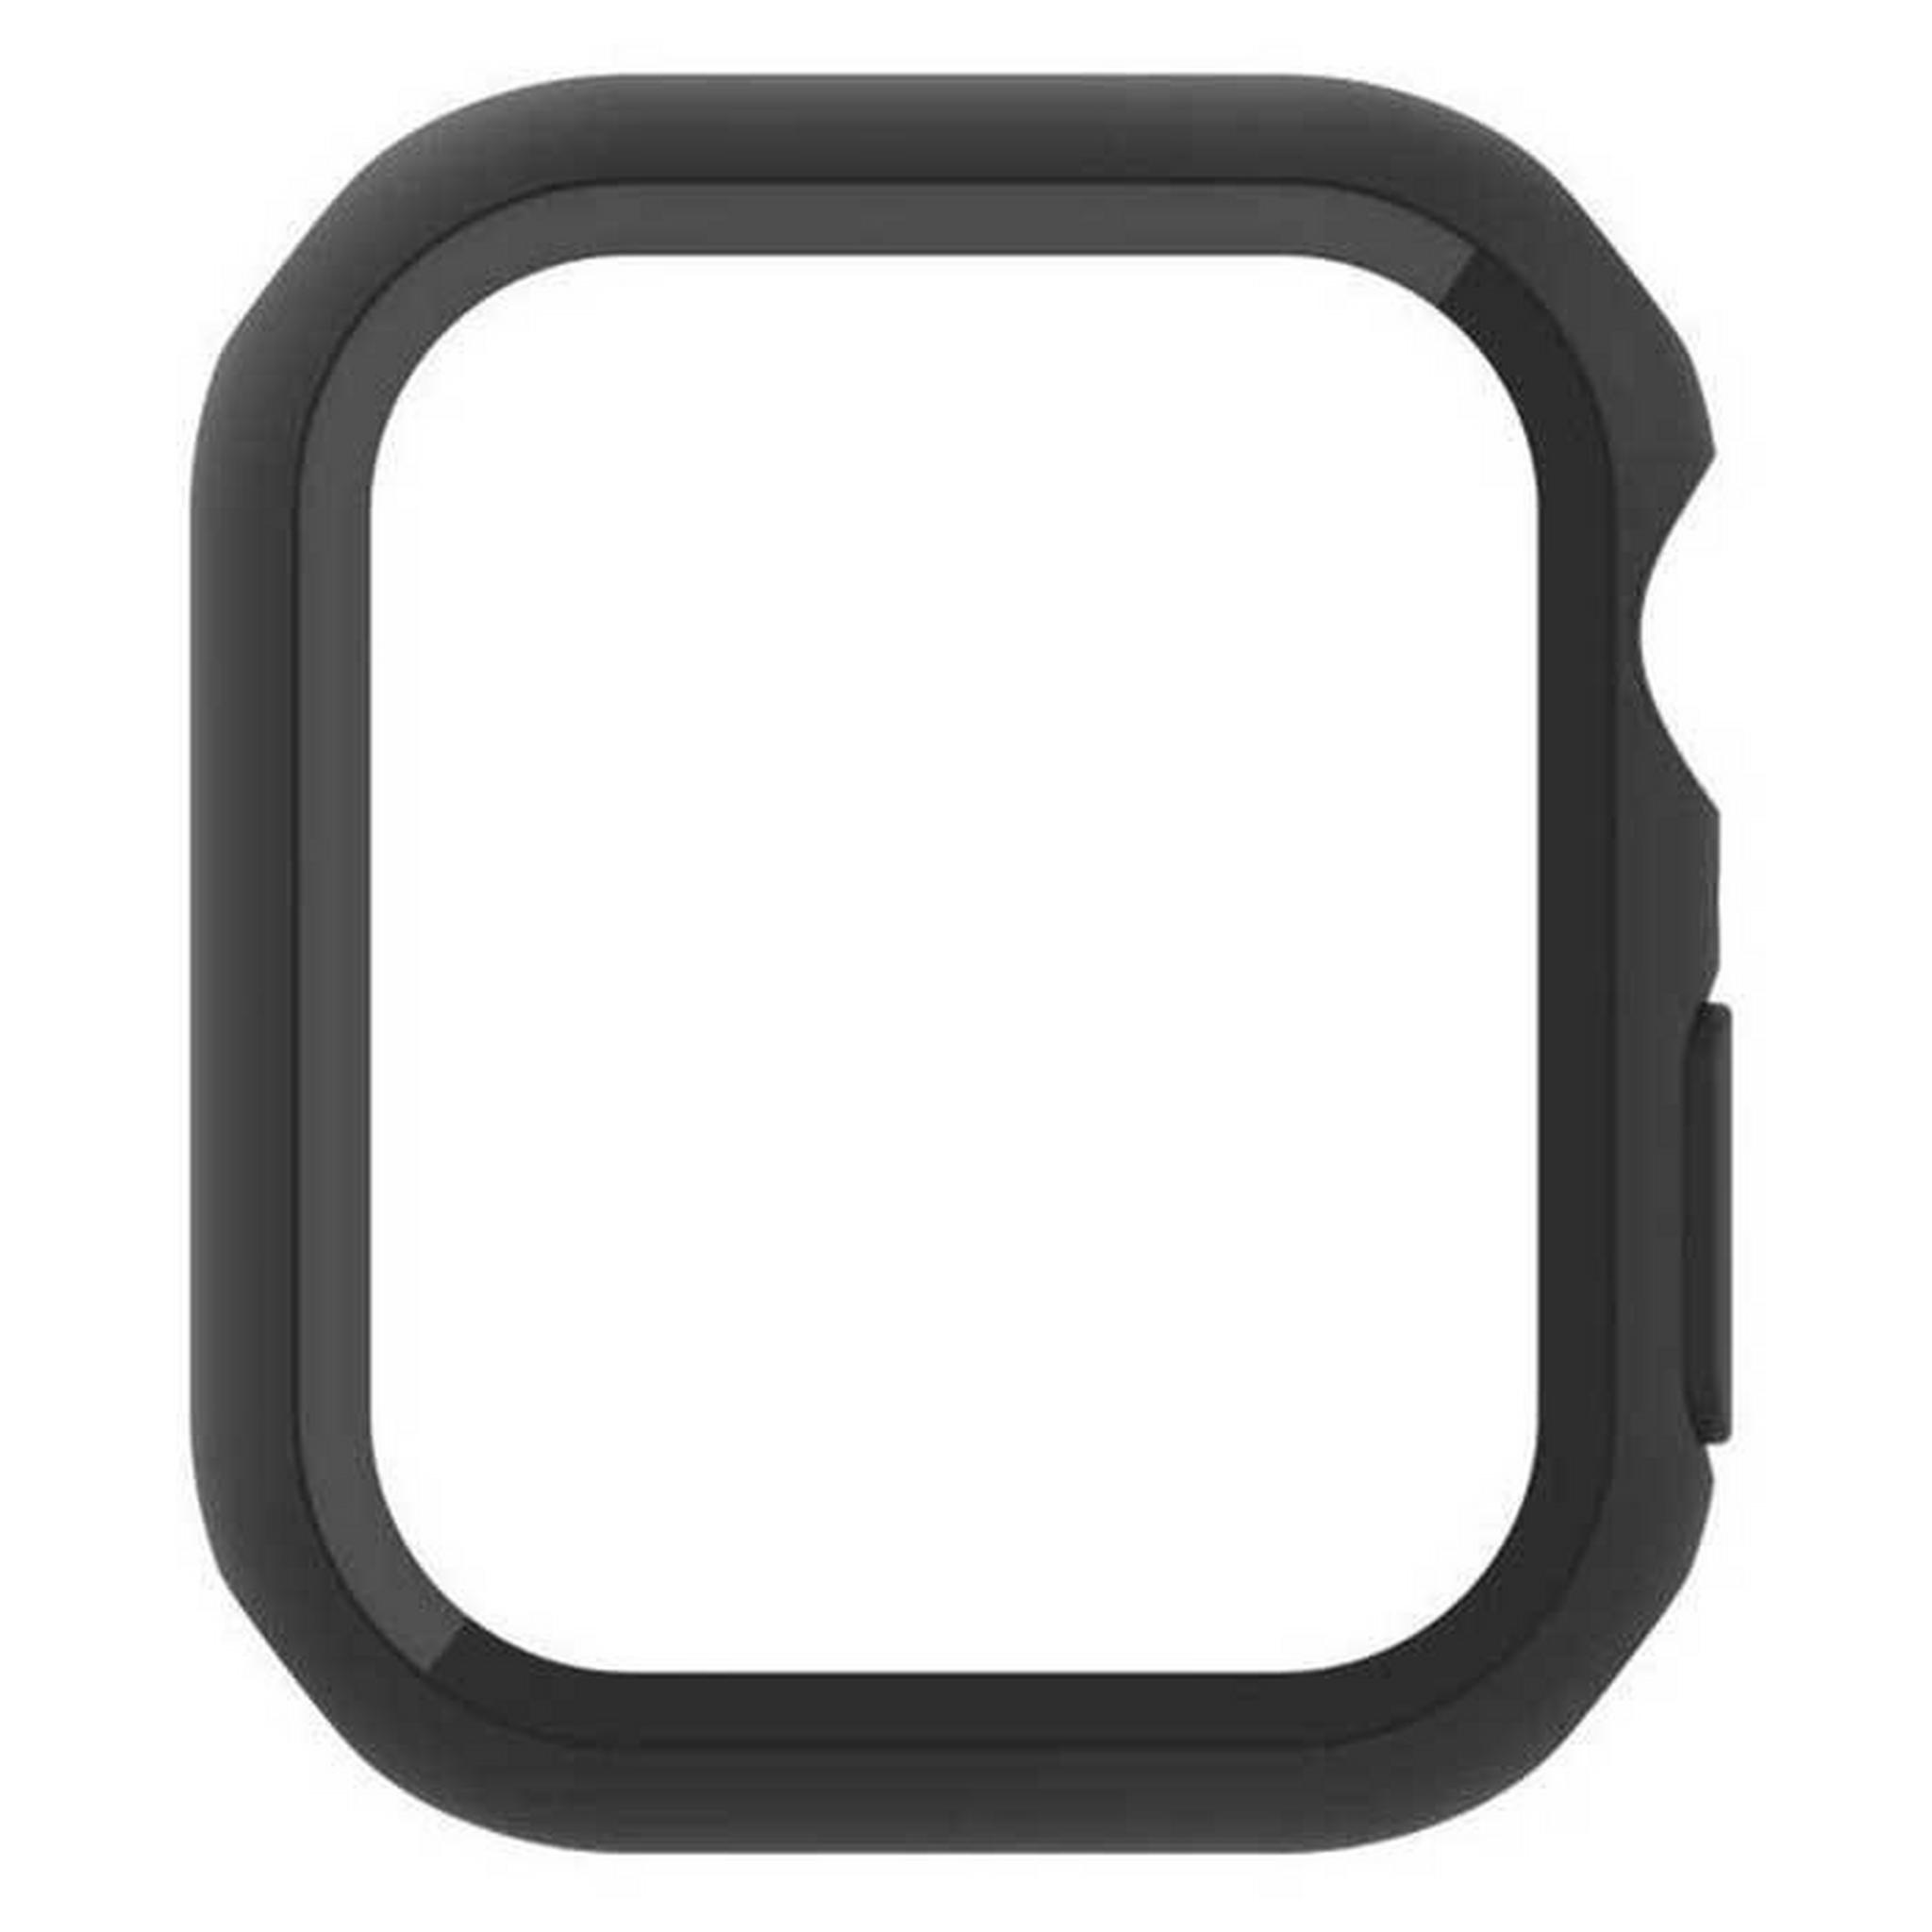 Uniq Nautic Apple Watch Screen Protector 45mm, 8886463684672 – Black